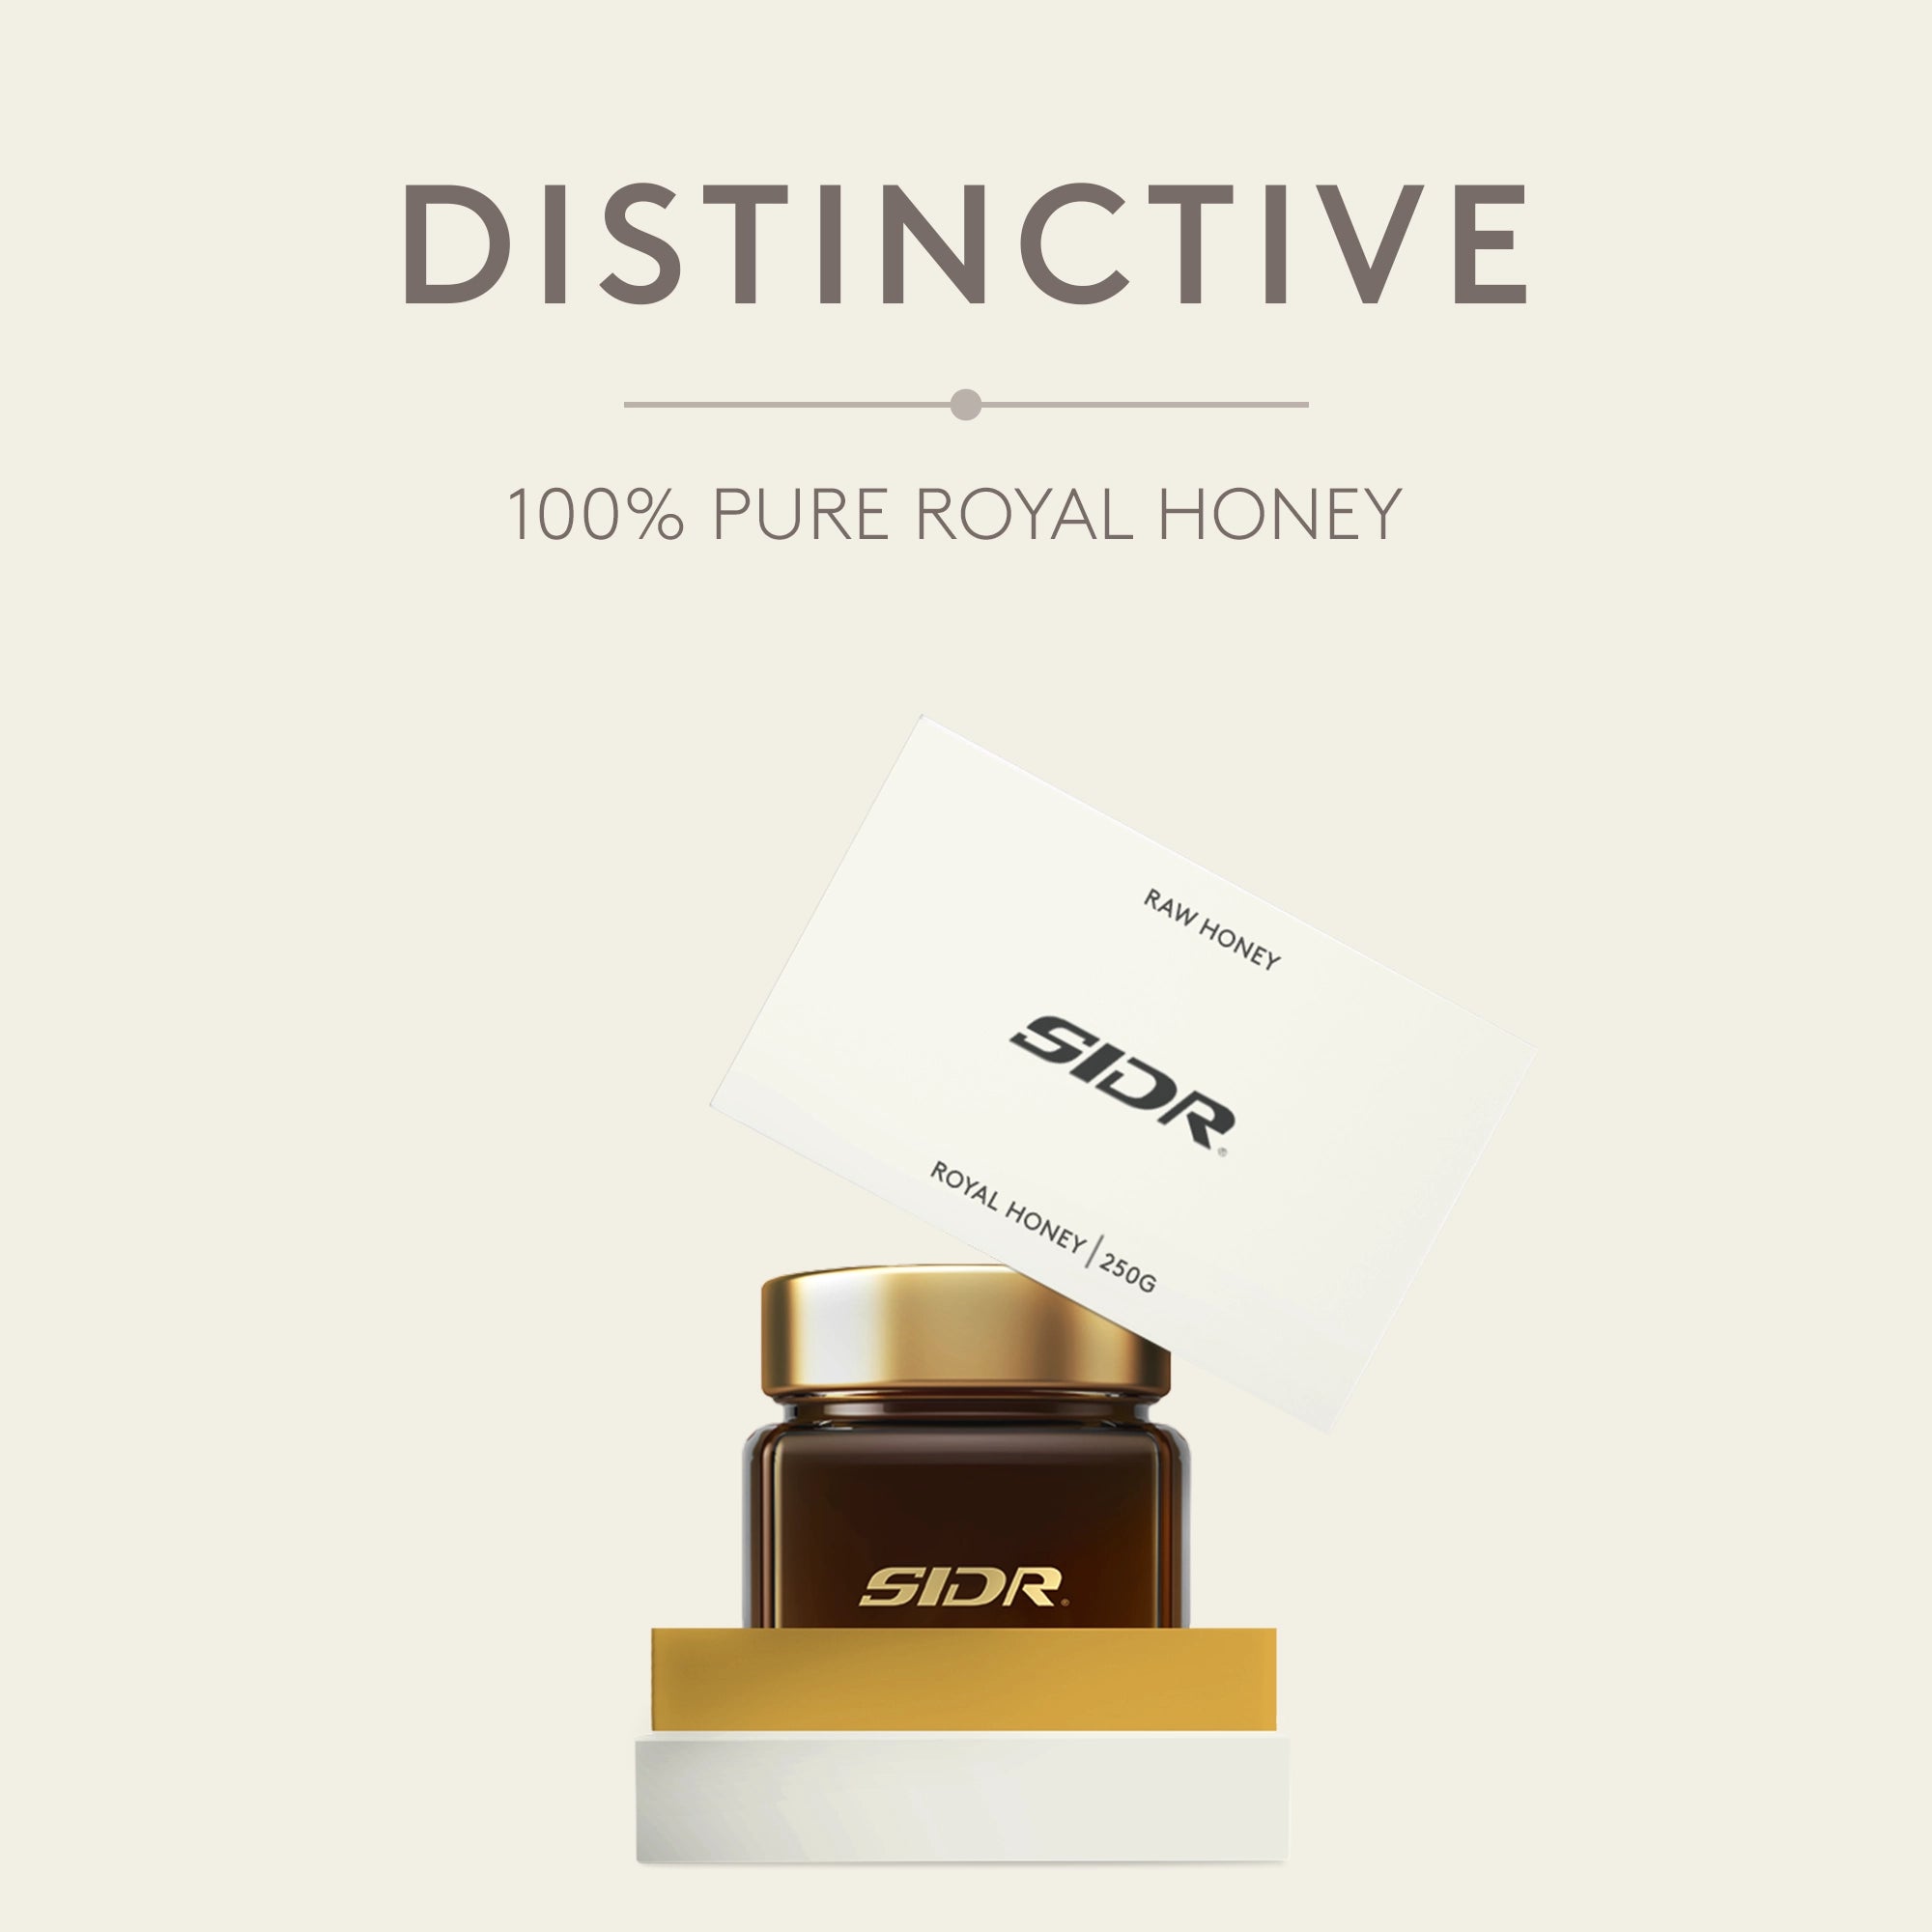 sidr royal honey distinctive